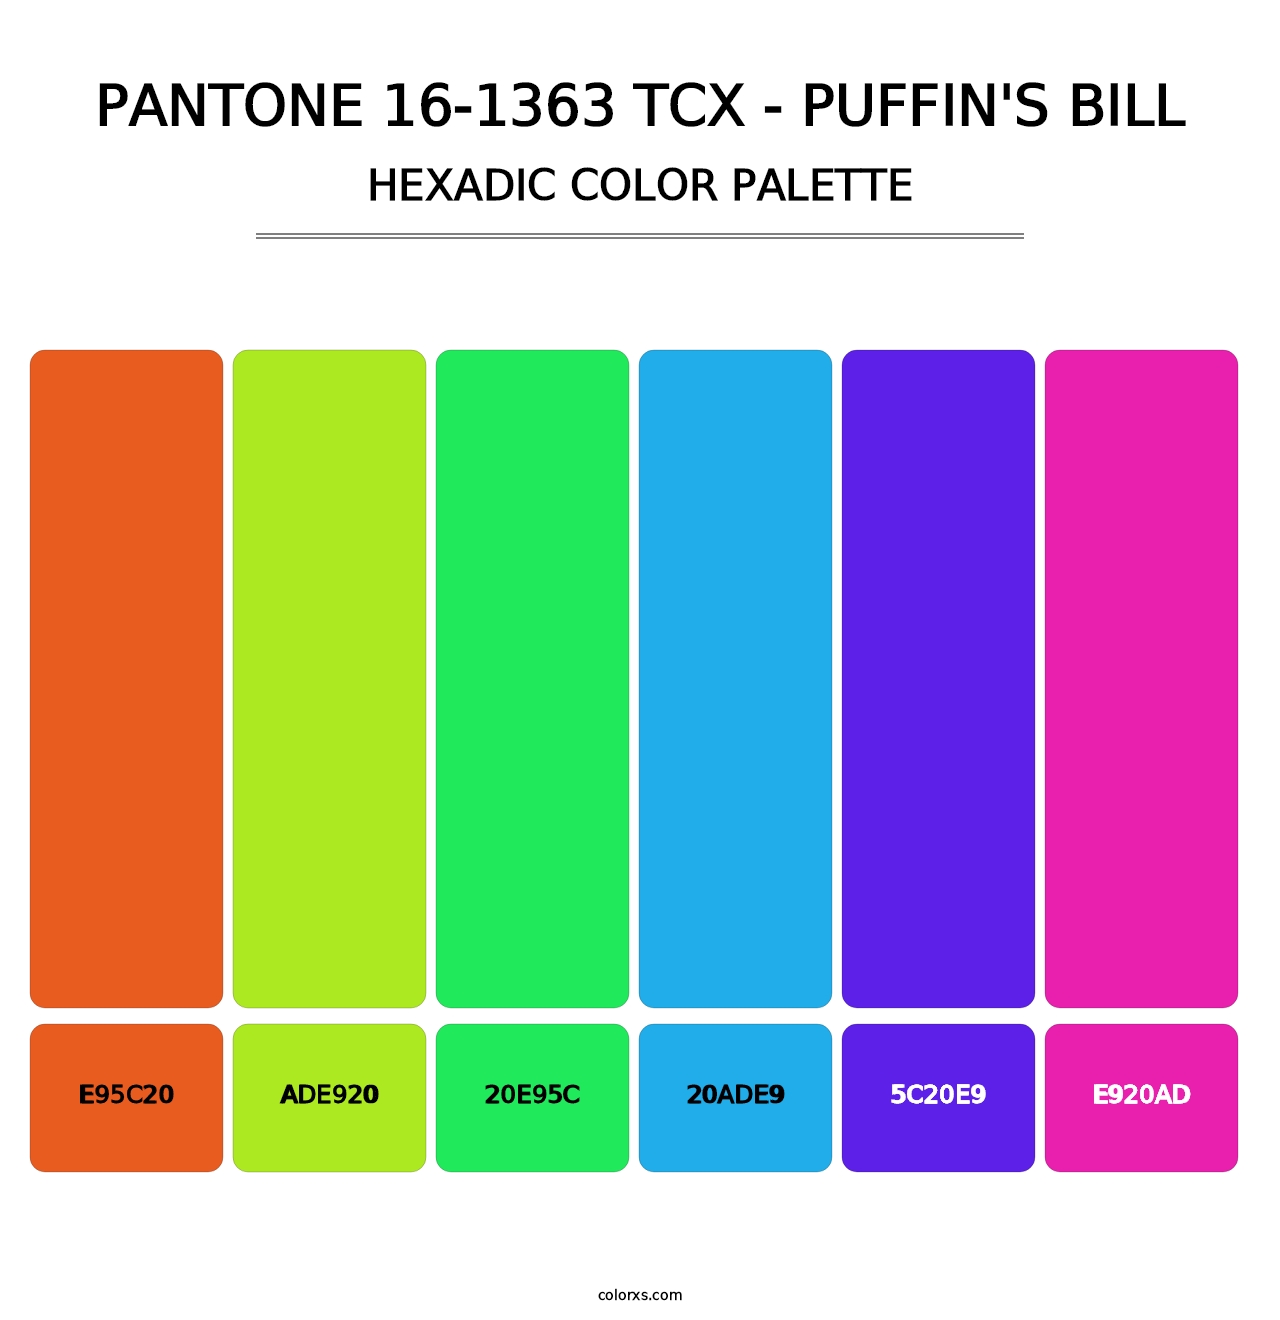 PANTONE 16-1363 TCX - Puffin's Bill - Hexadic Color Palette